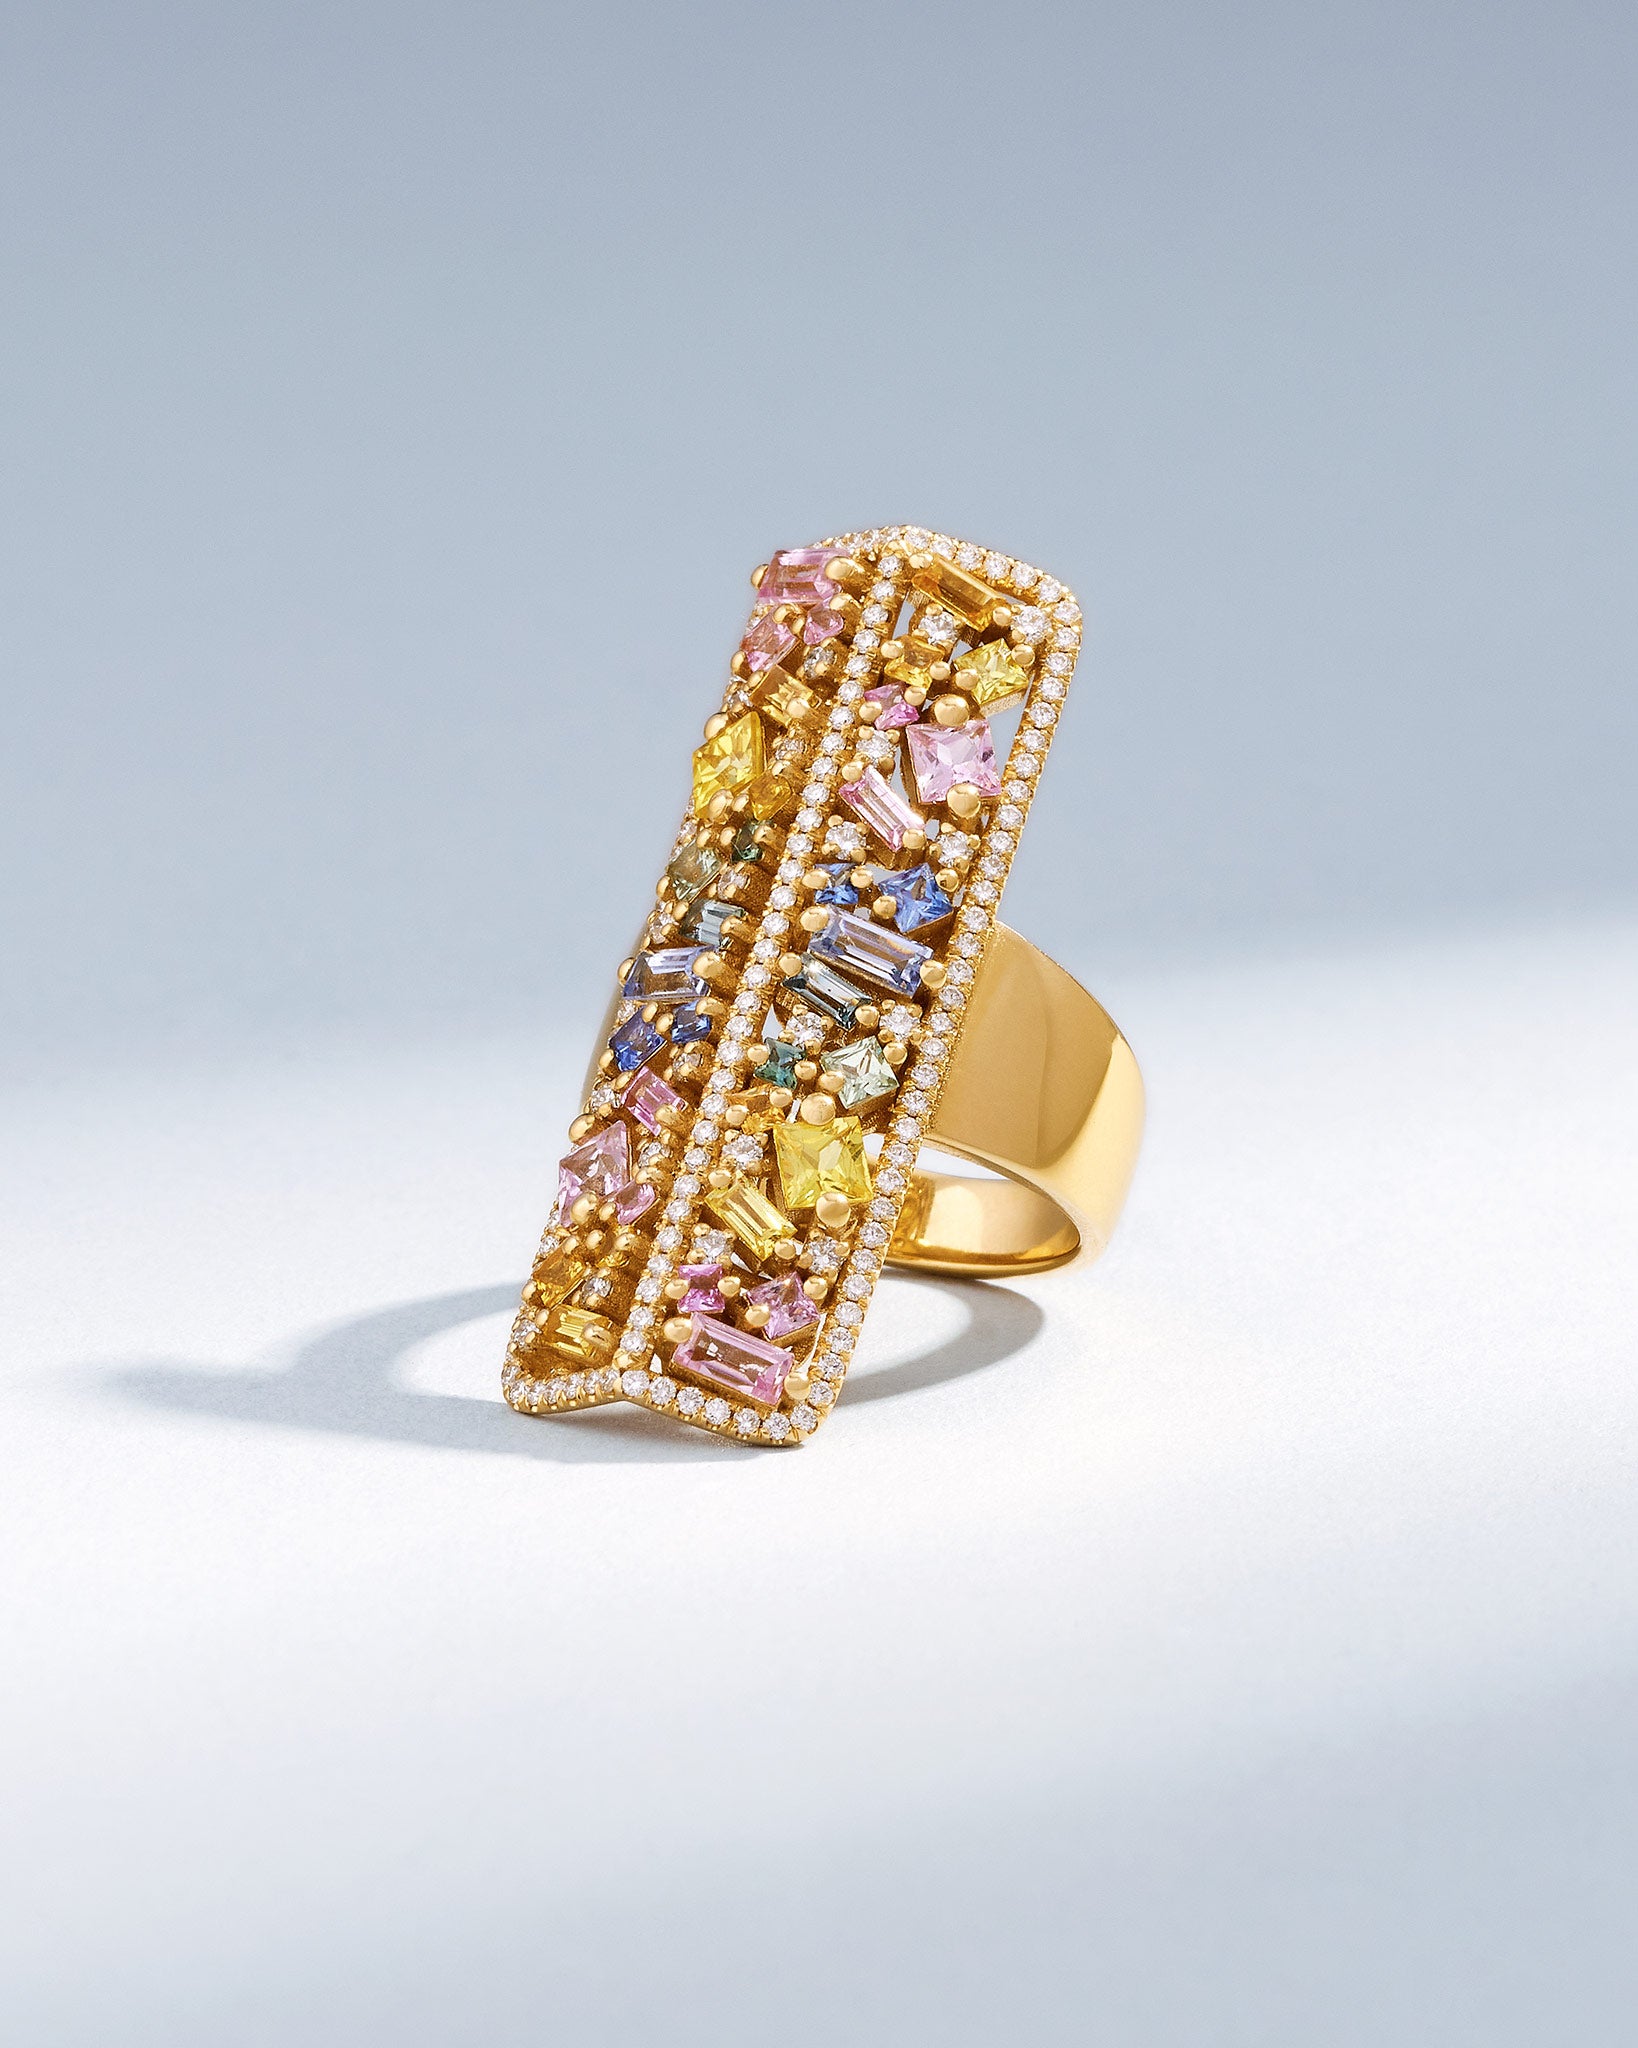 Suzanne Kalan La Fantaisie Sunbeam Pastel Sapphire Ring in 18k yellow gold 